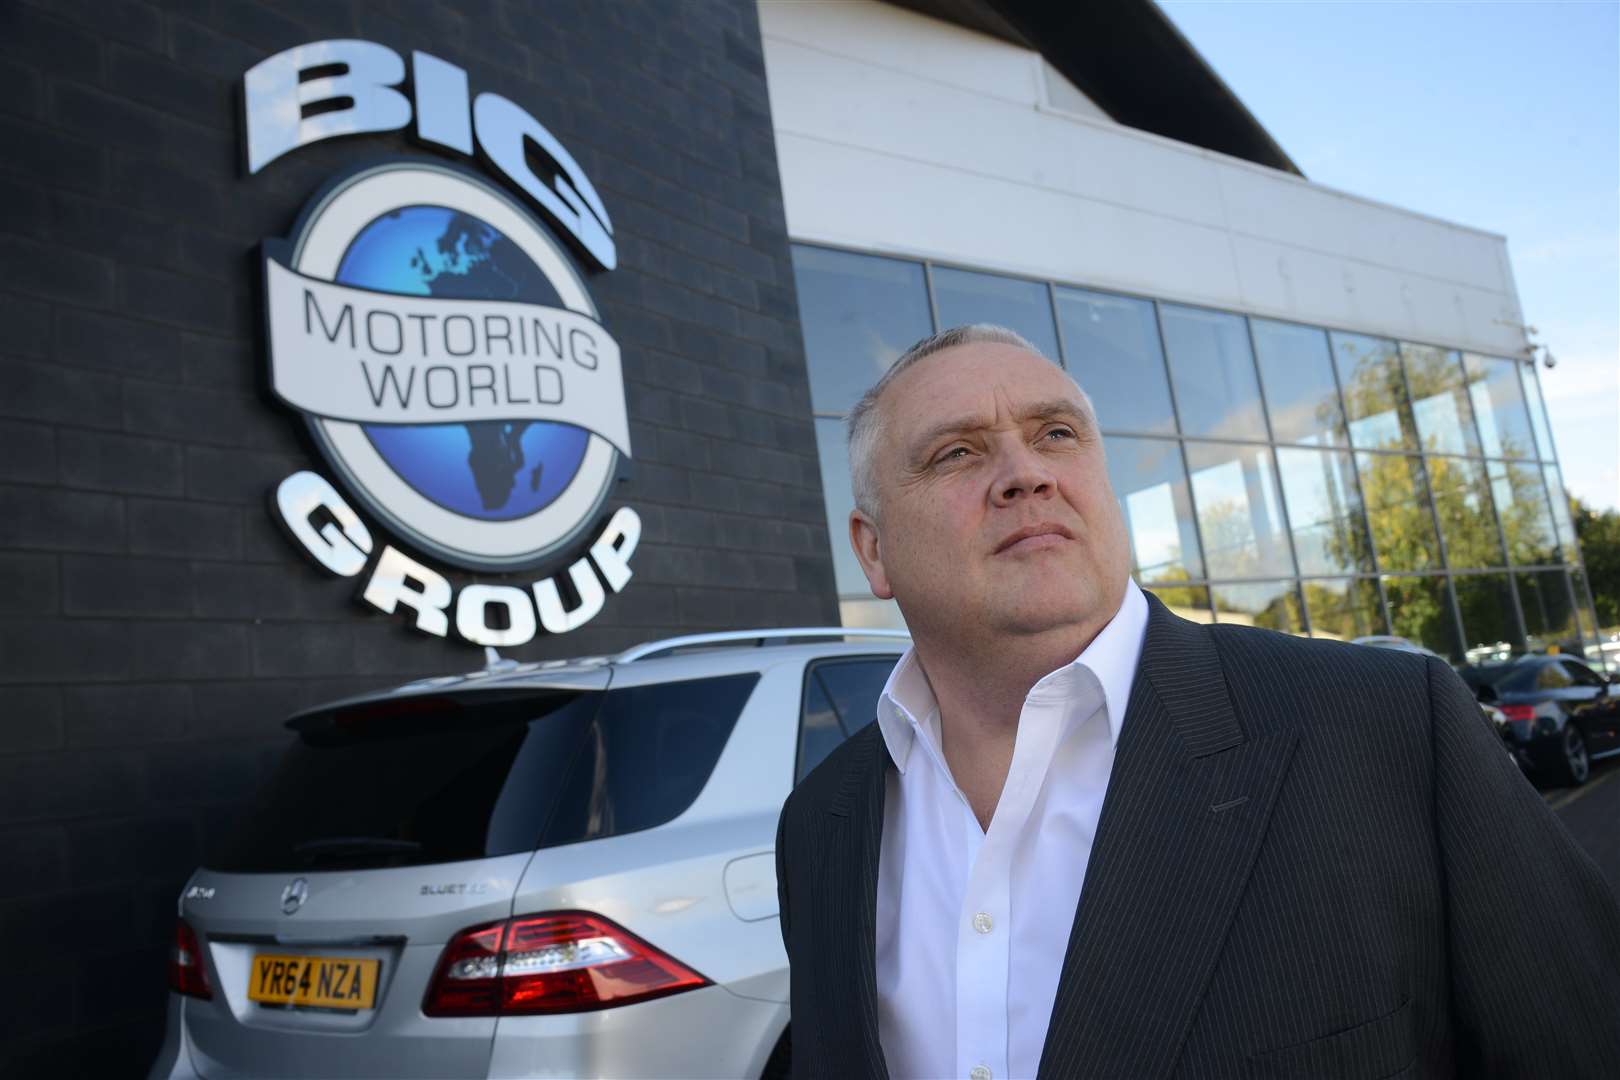 Big Motoring World chief executive Peter Waddell